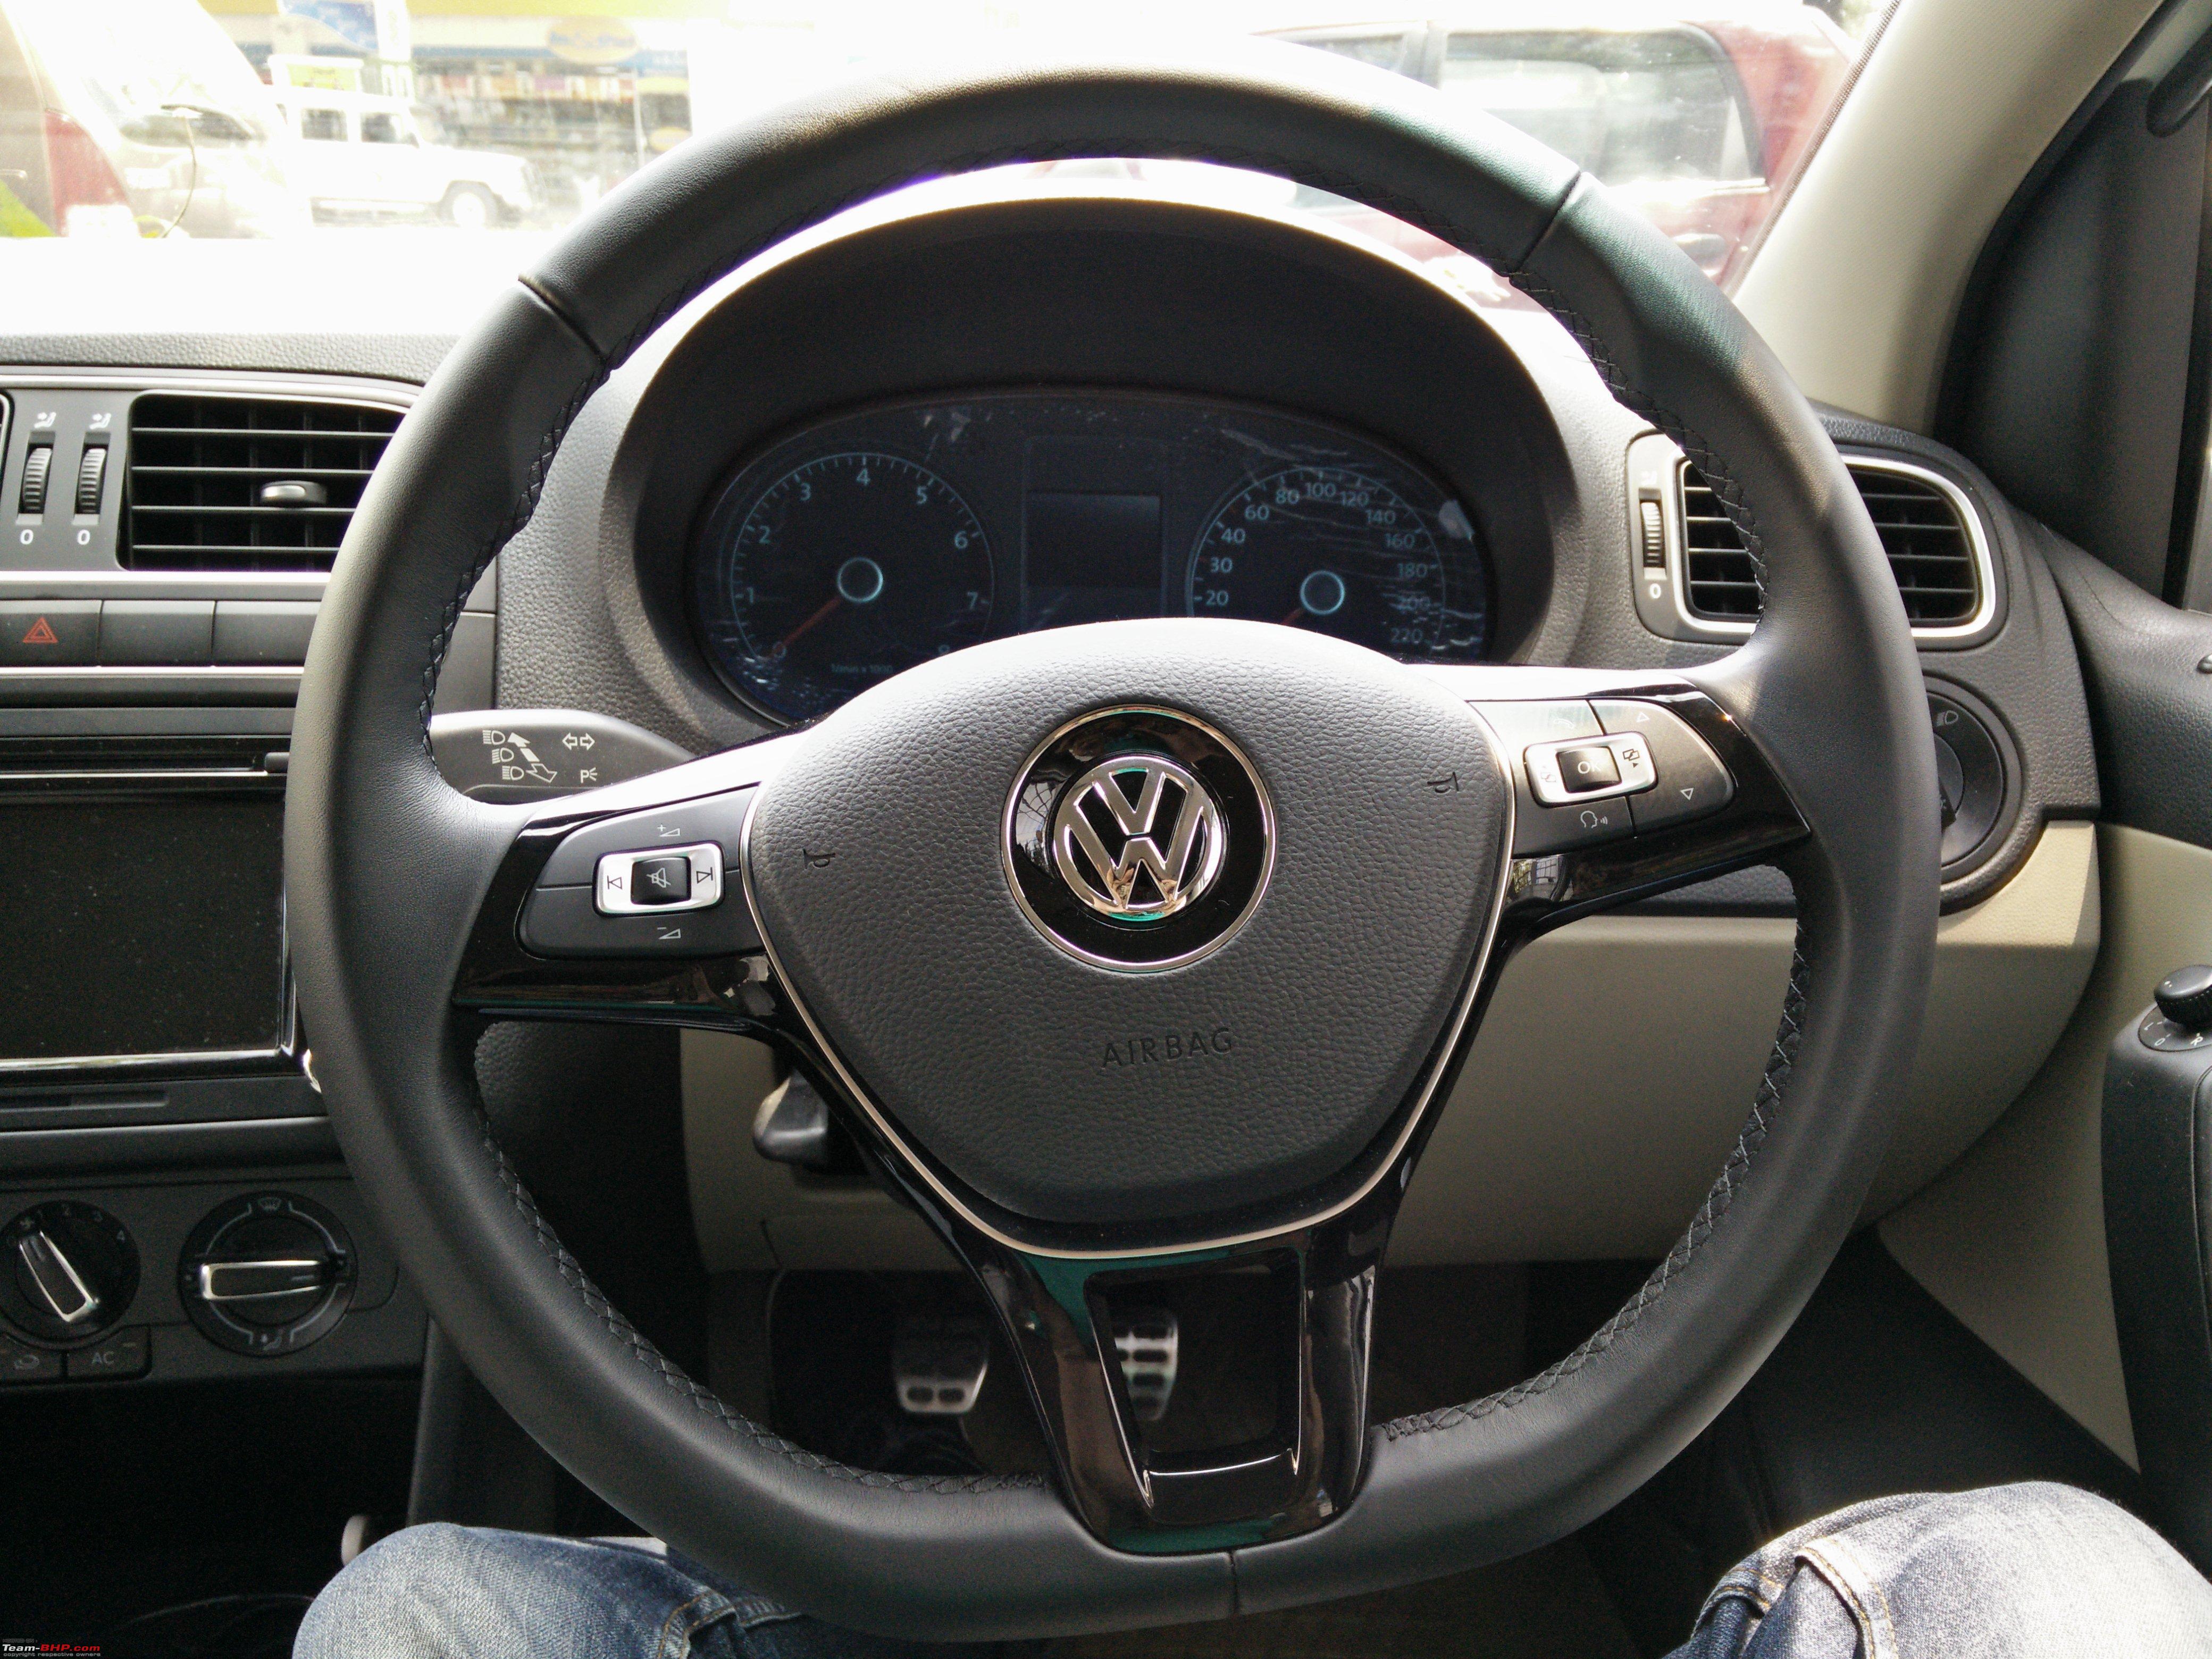 VW Polo DIY: Upgrading the BCM (Body Control Module) - Team-BHP